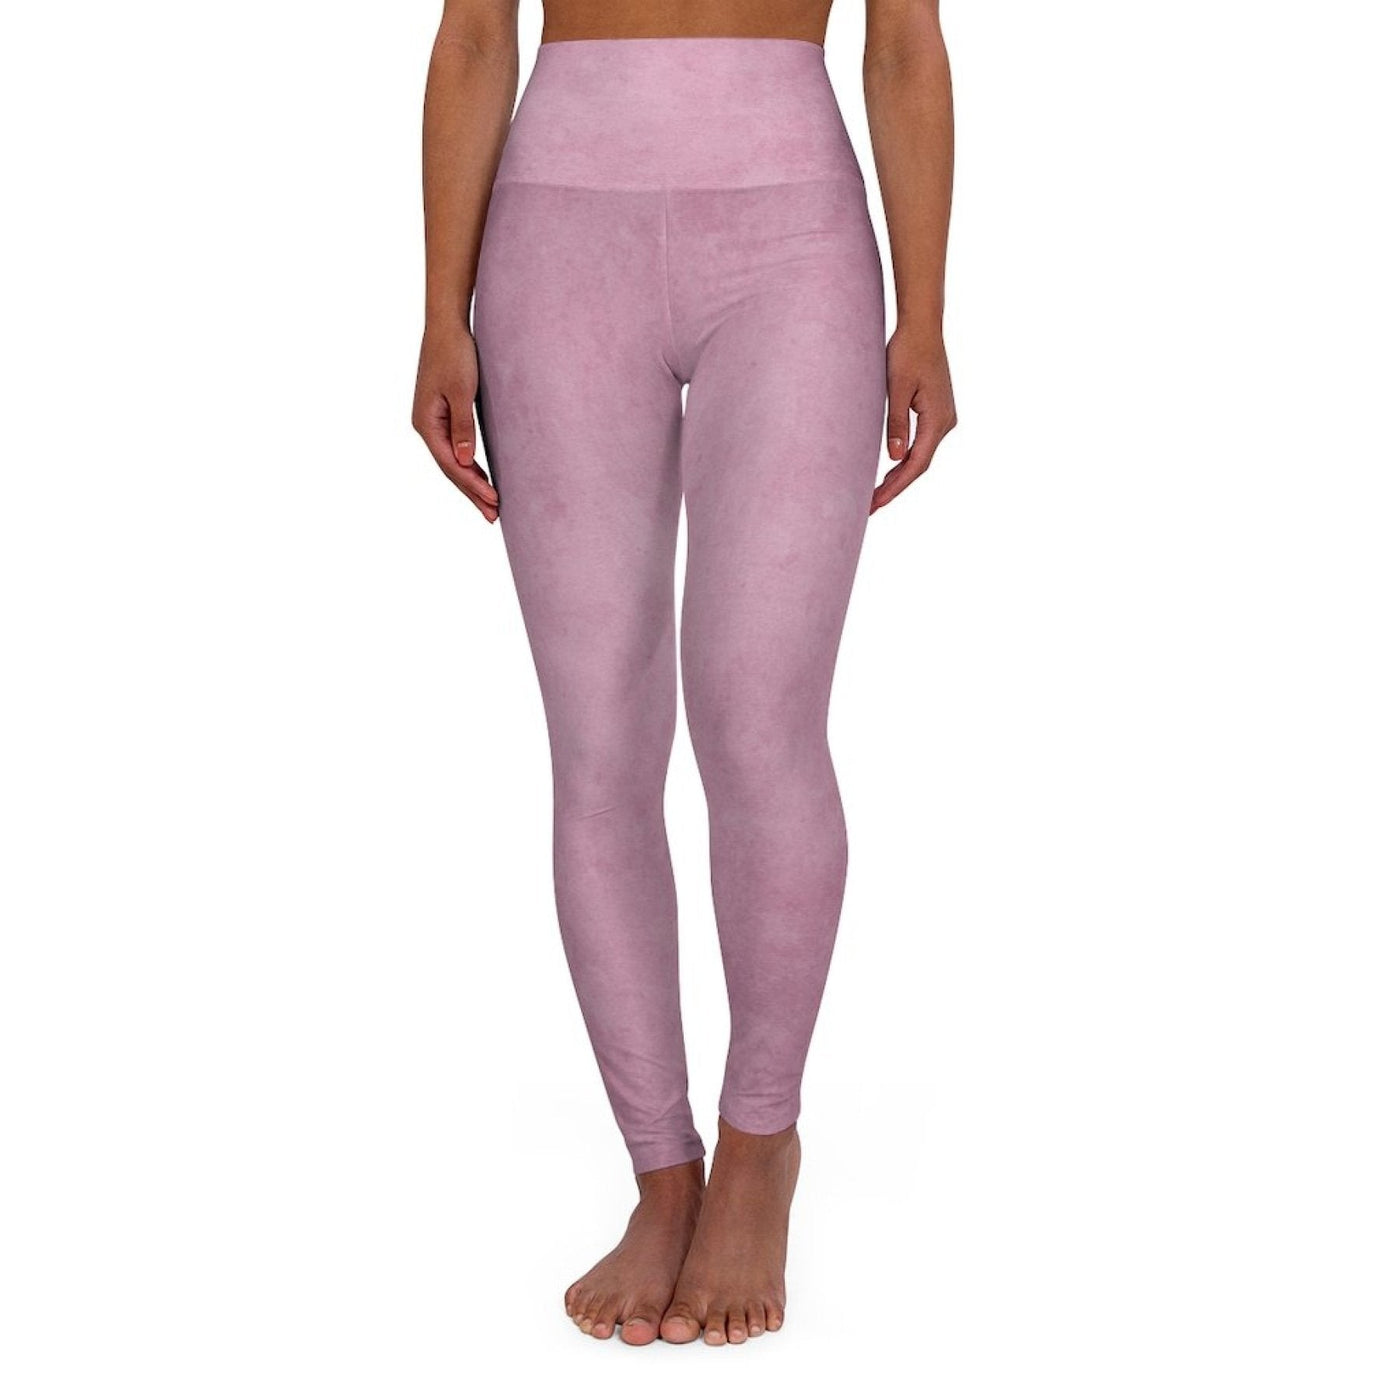 High - waist Fitness Legging Yoga Pants Pink - Womens | Leggings